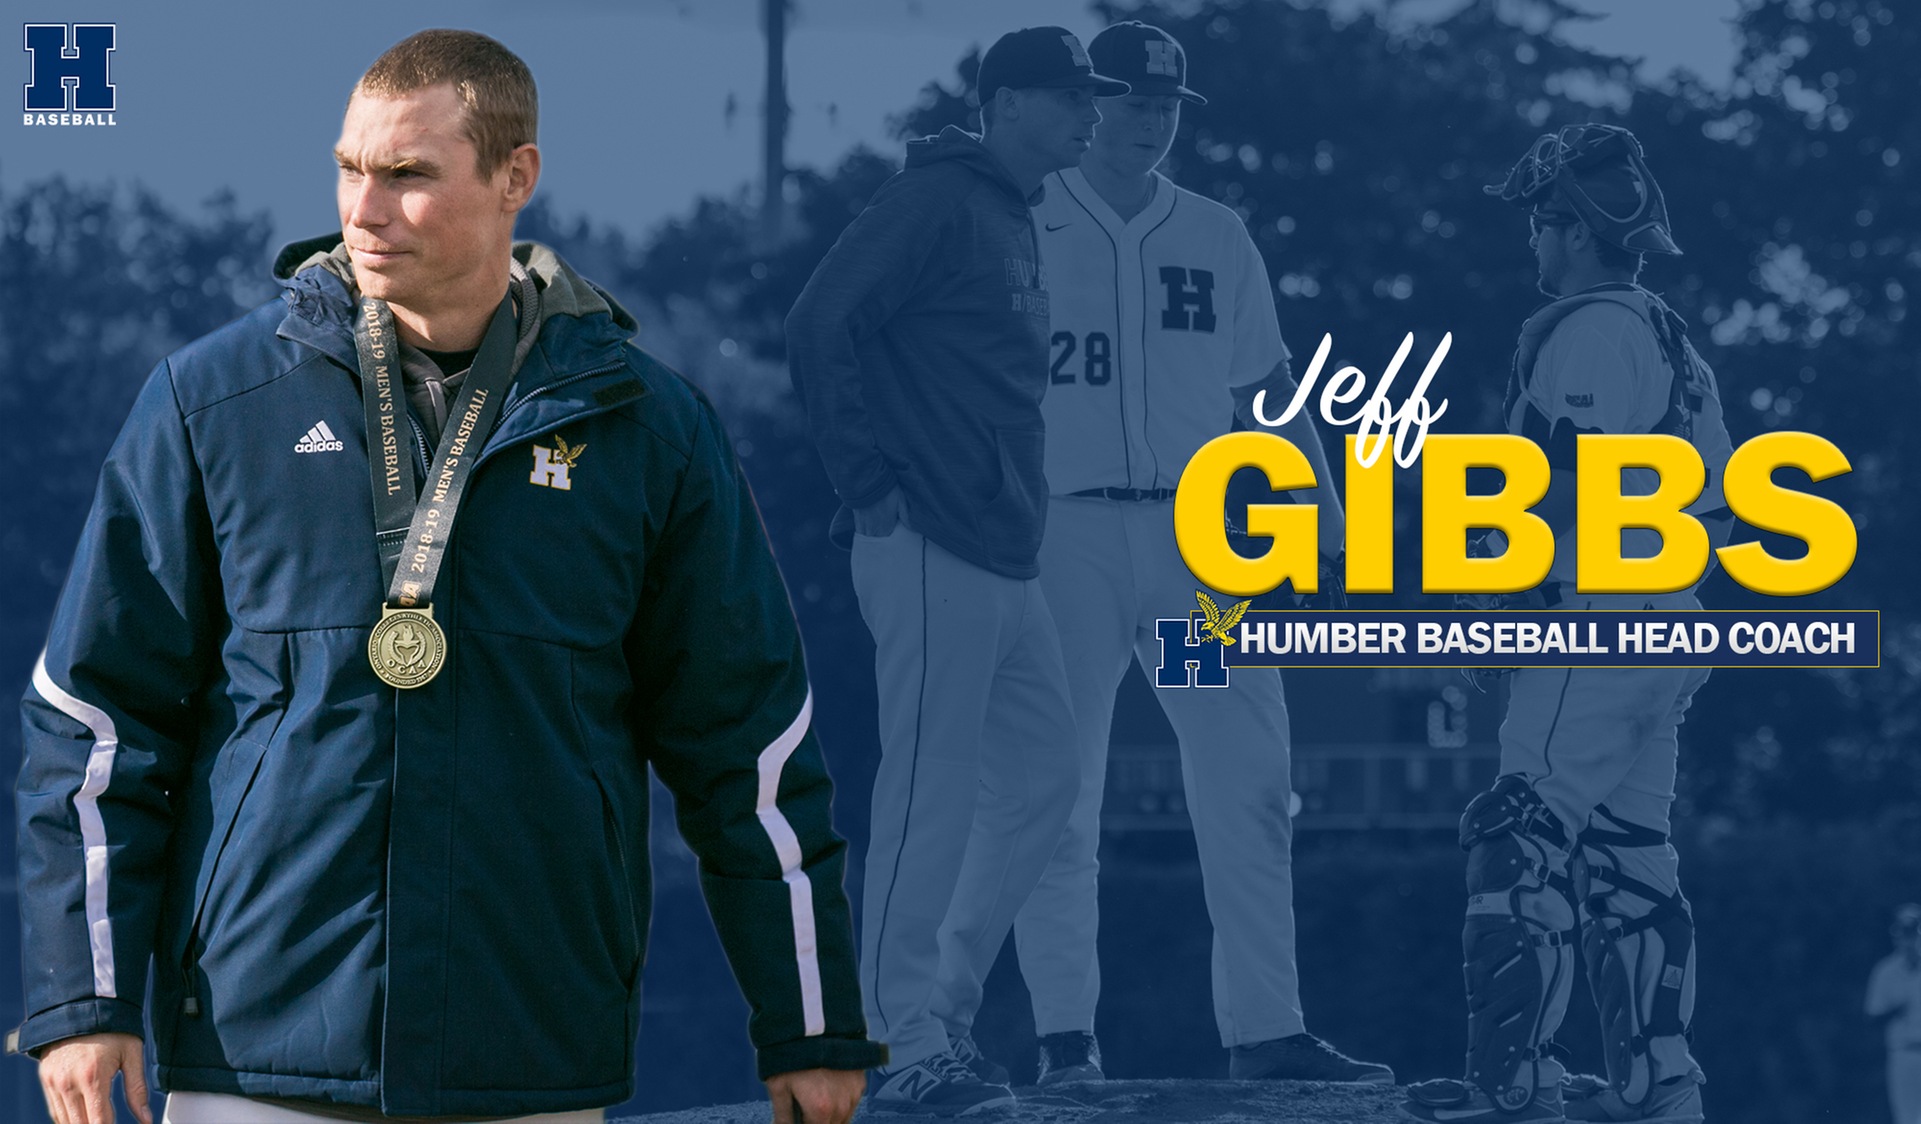 Gibbs Named Humber Baseball Head Coach